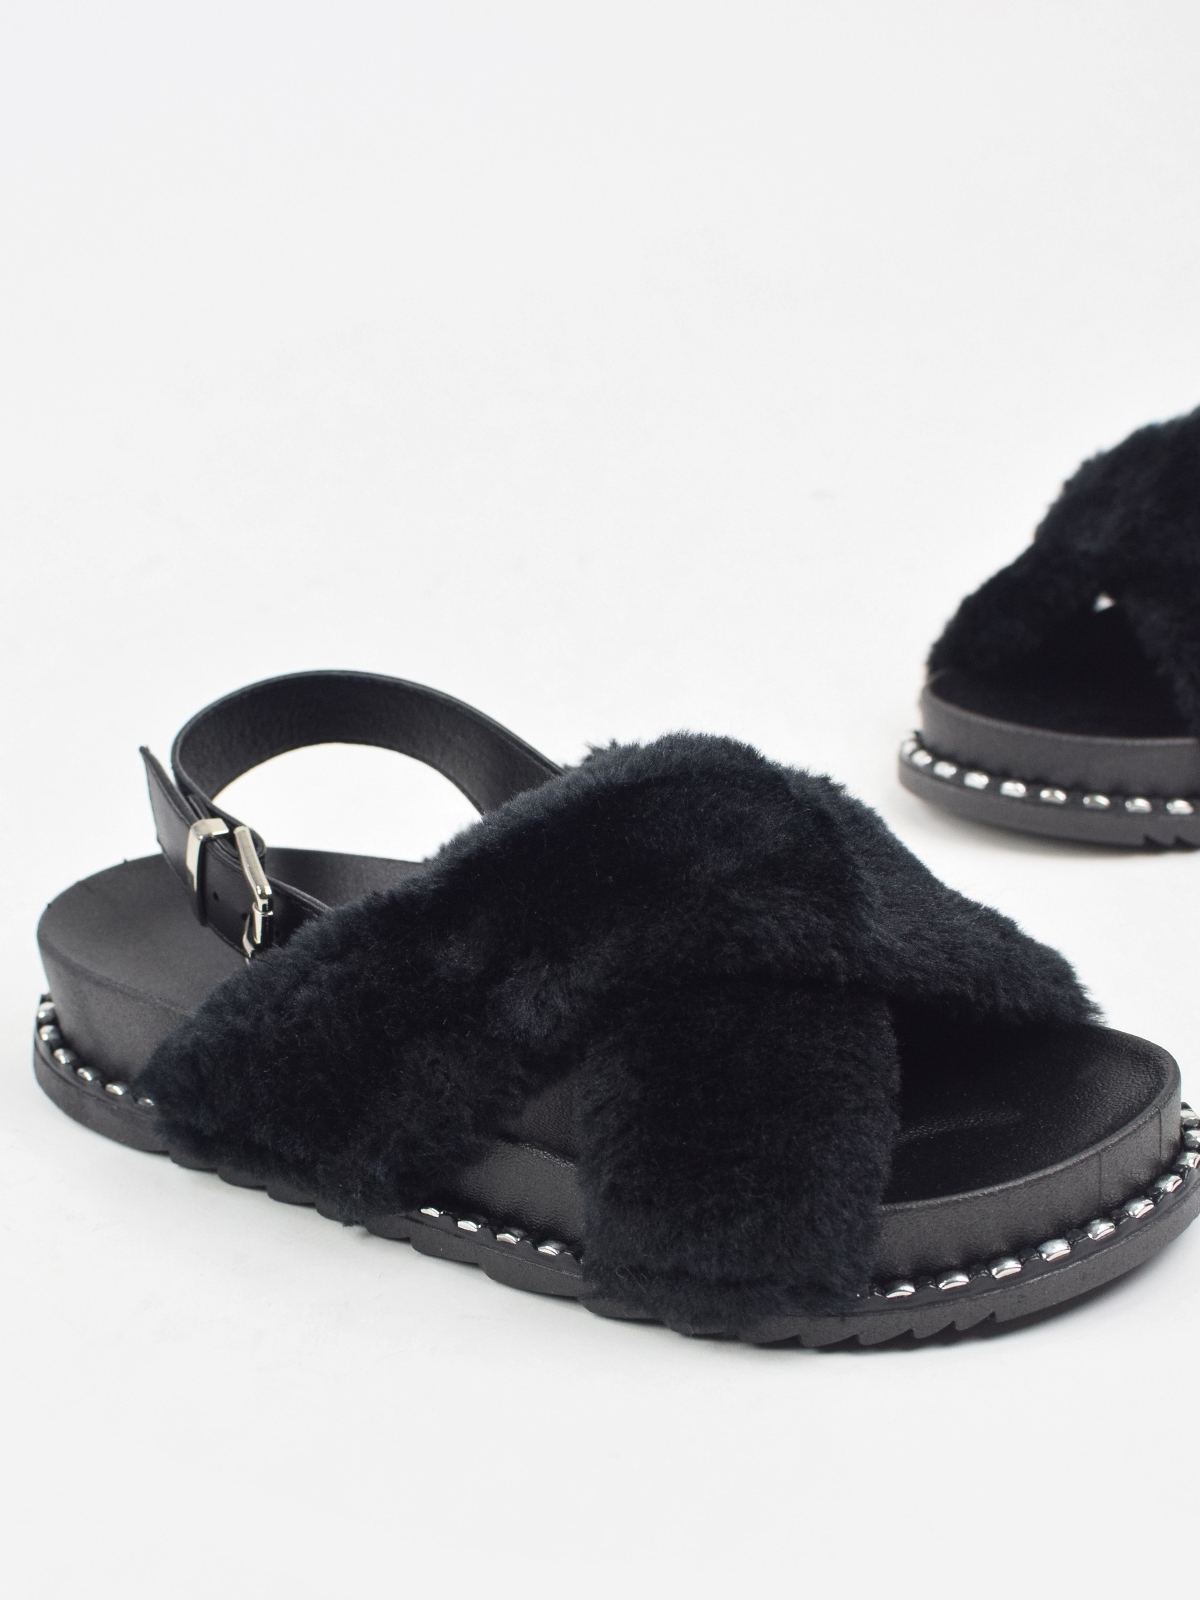 Stylish adjustable sandals with medium platform in black